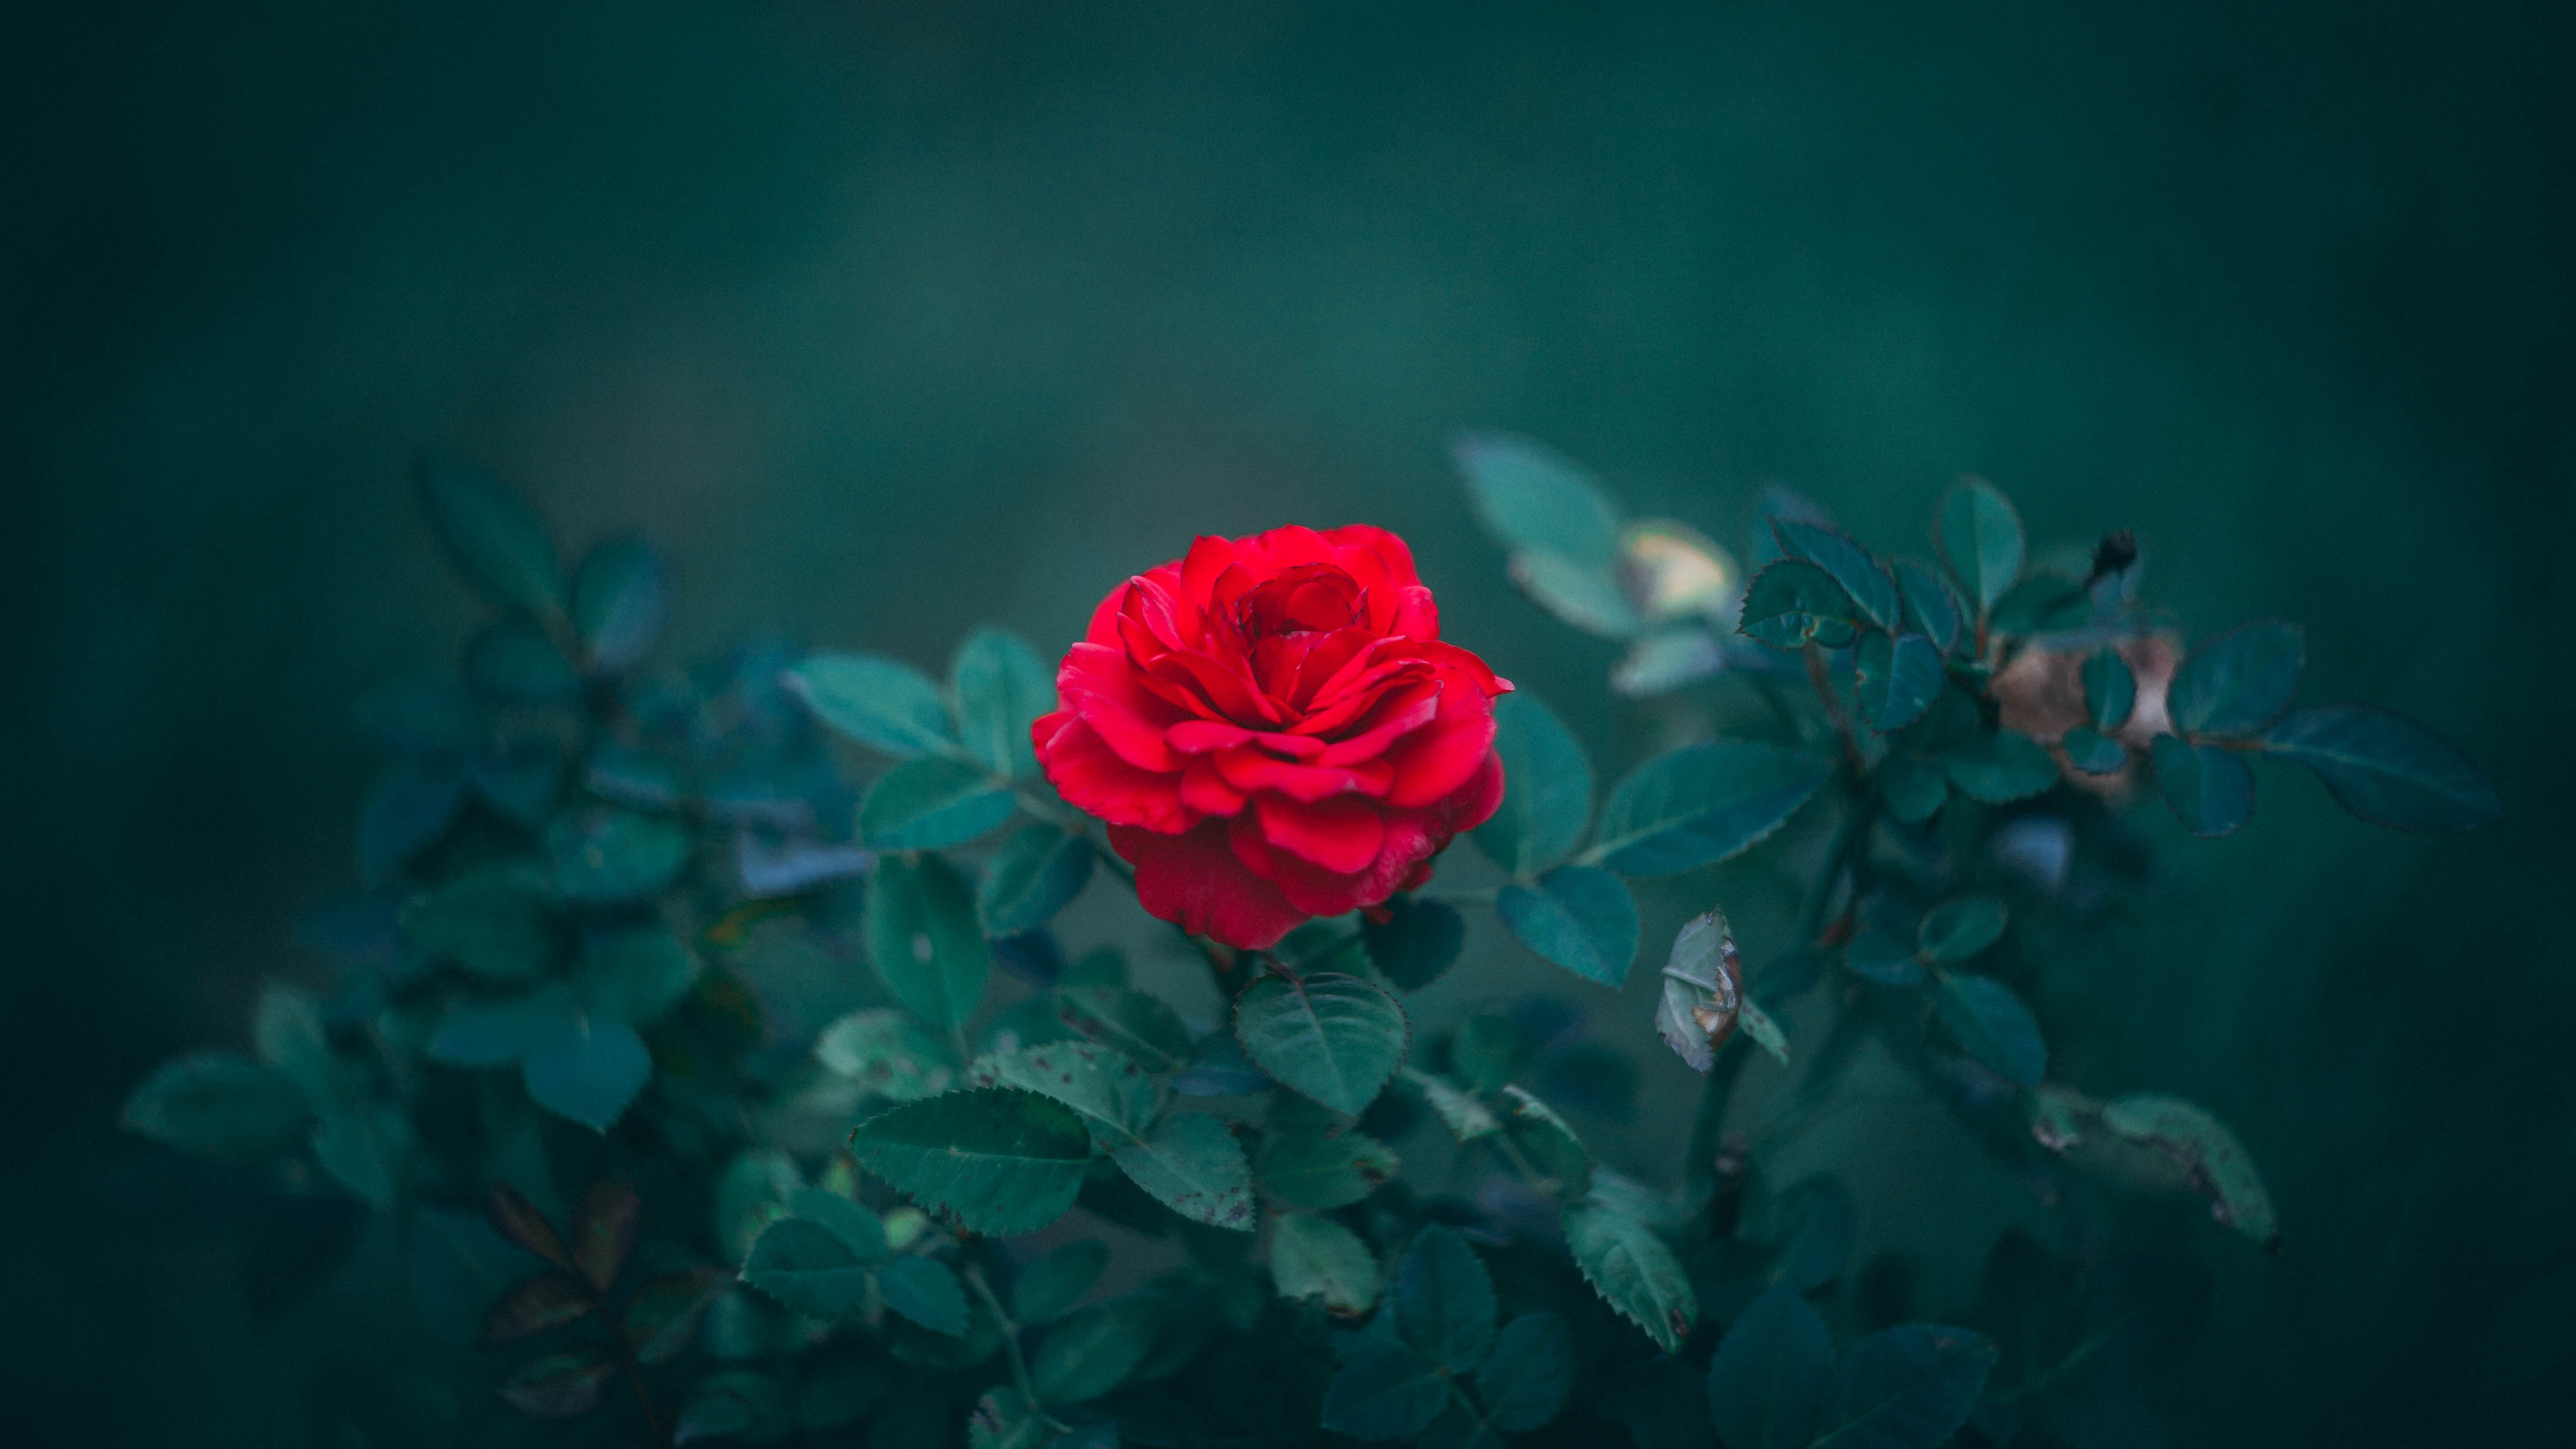 smooth, bud, leaves, rose flower, red, flowers, bush, rose, blur images